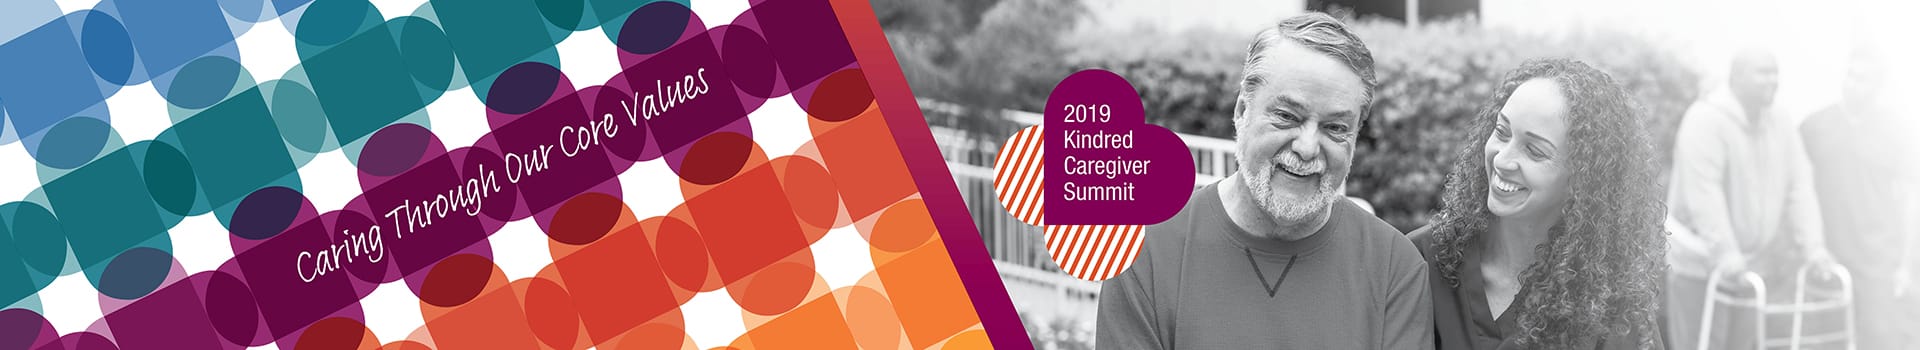 197827-01 2019 Caregiver Summit Masthead WEB